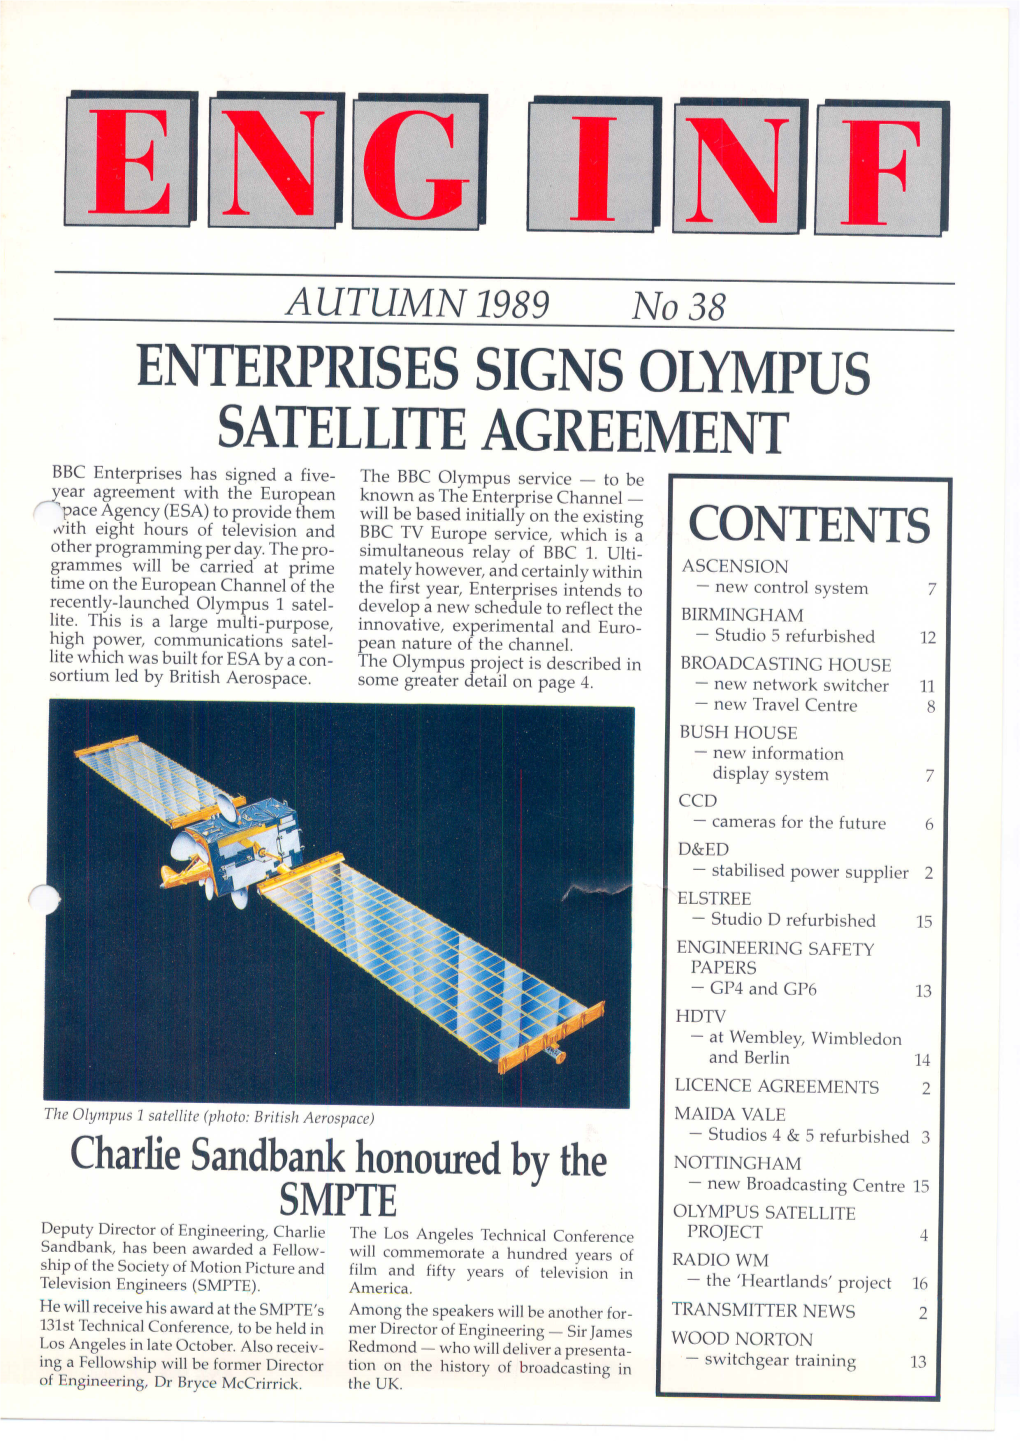 Enterprises Signs Olympus Satellite Agreement